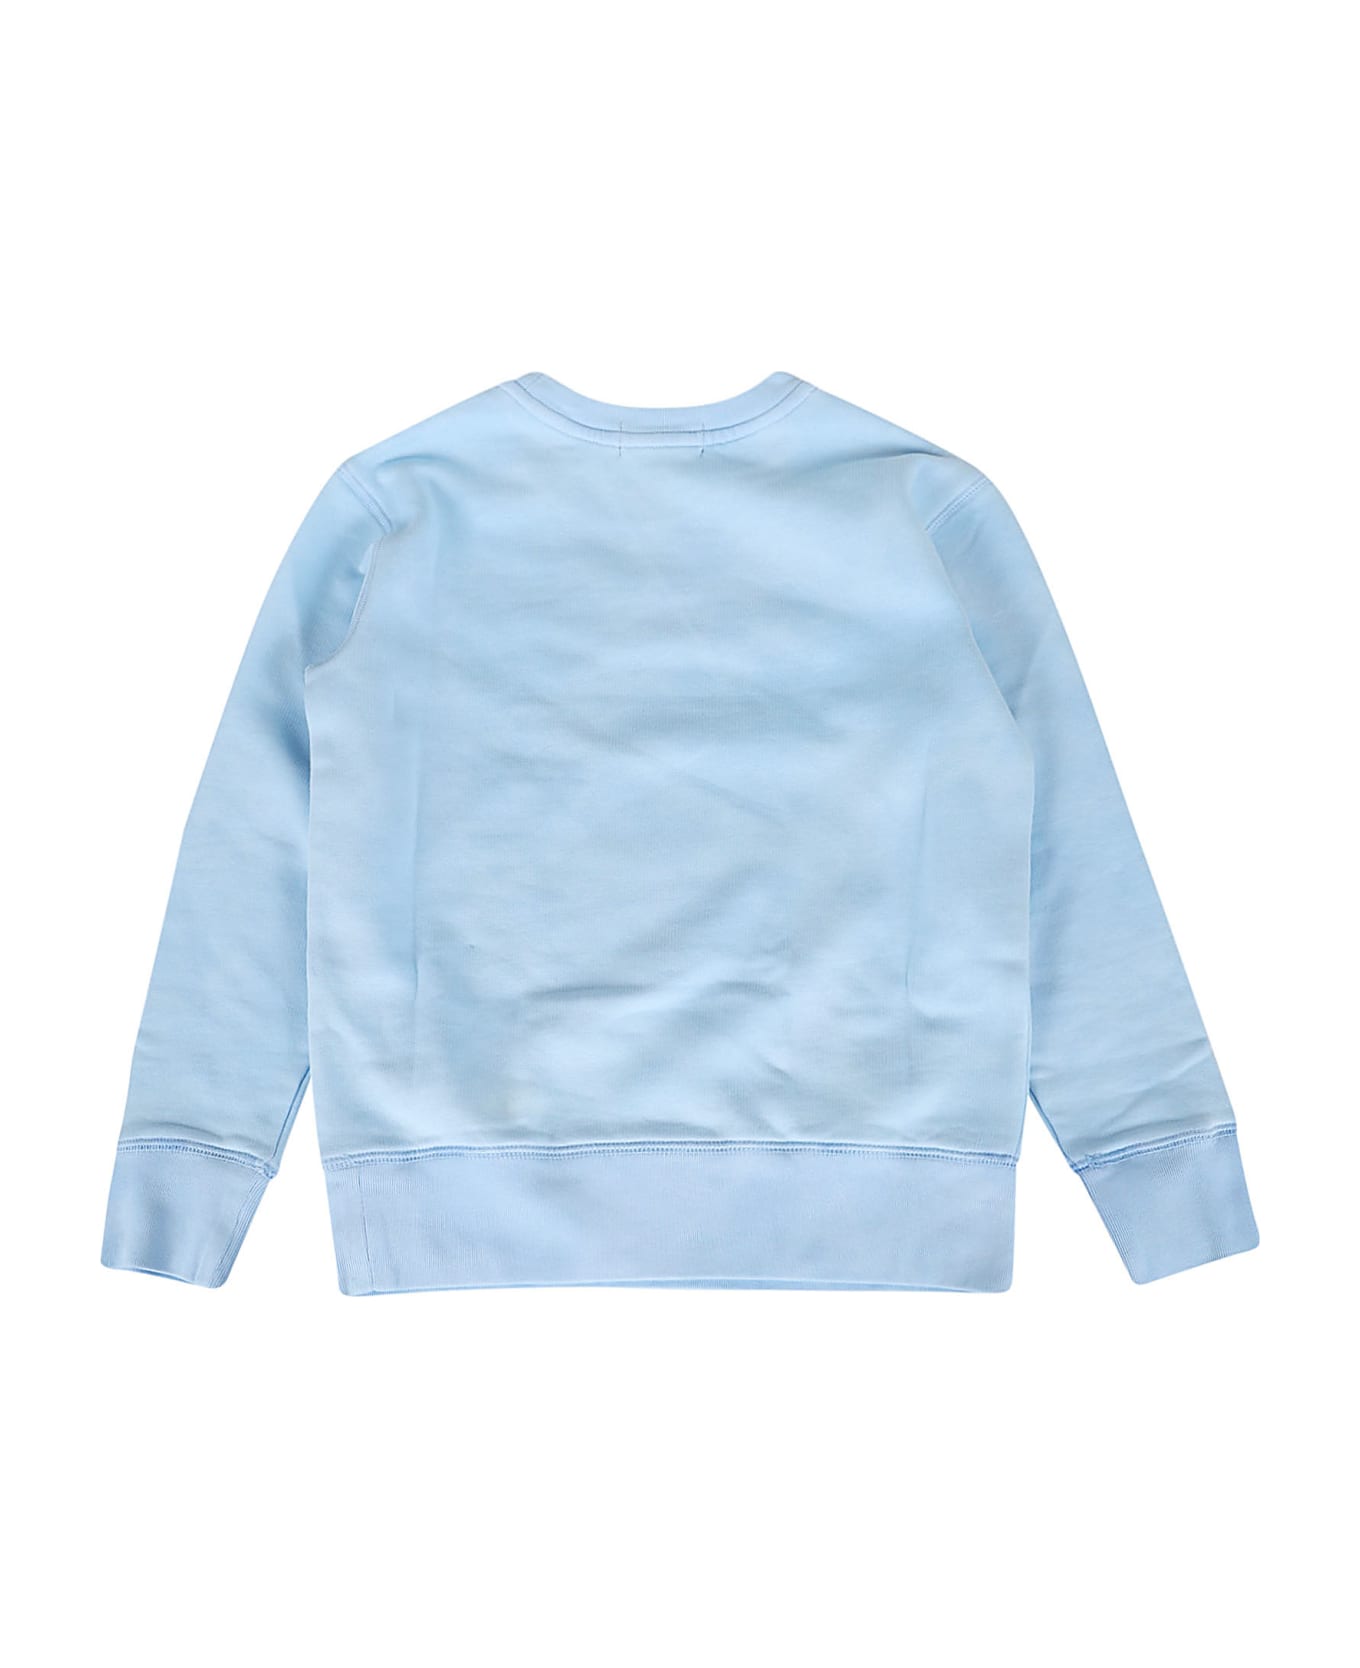 Ralph Lauren Lscnm2-knit Shirts-sweatshirt - Riviera Blue Multi